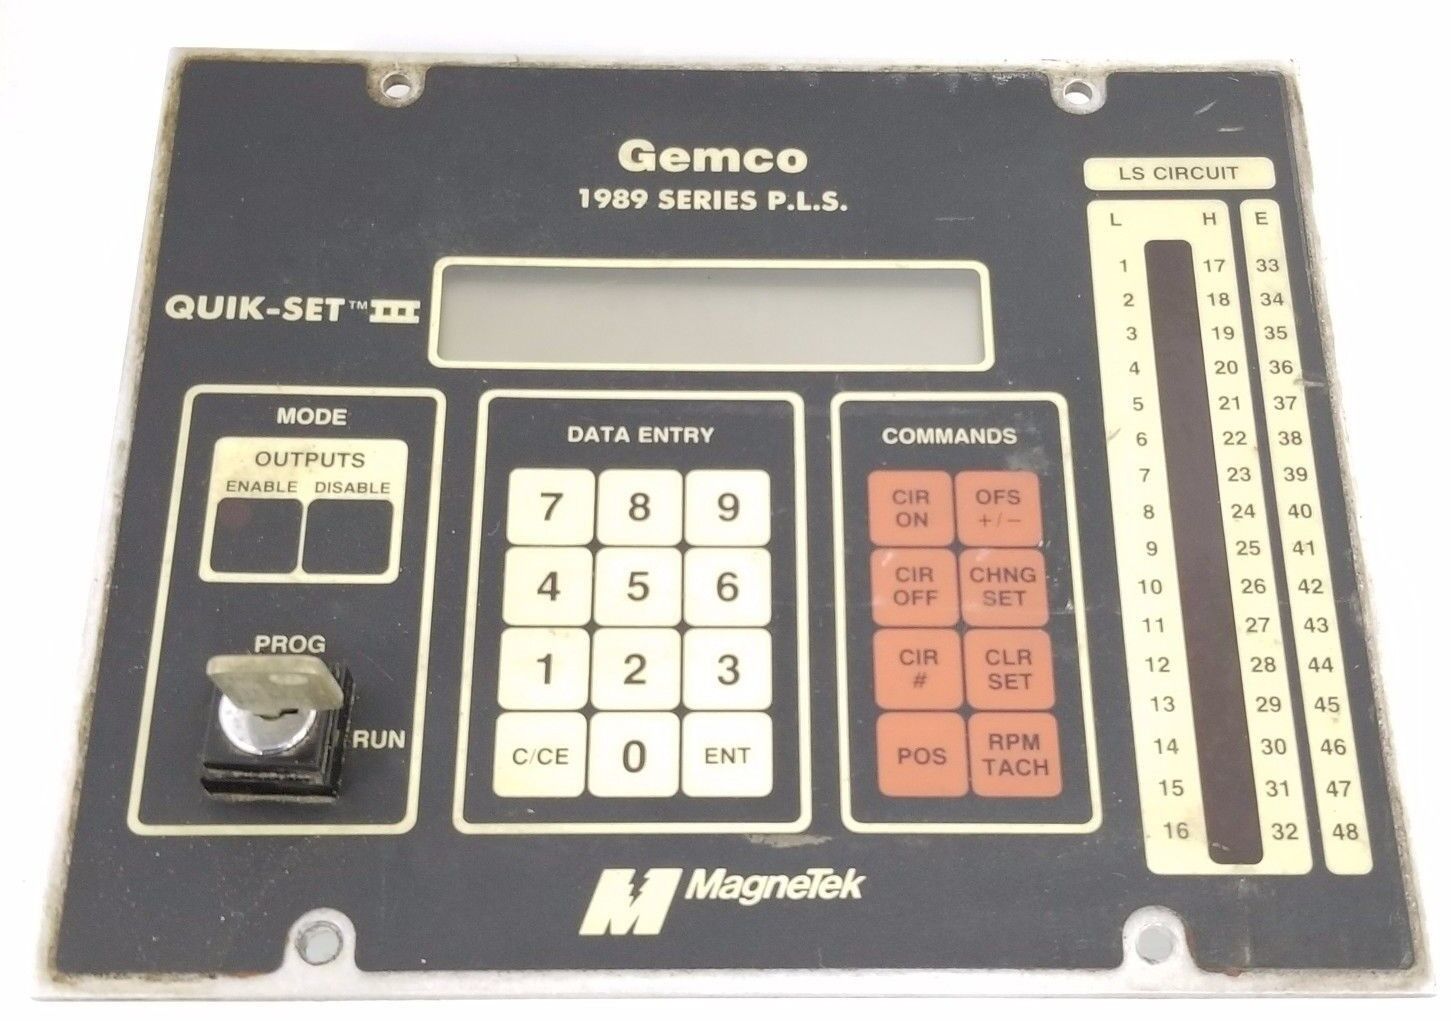 MAGNETEK GEMCO 1989 SERIES P.L.S. QUIK-SET III CONTROL PANEL